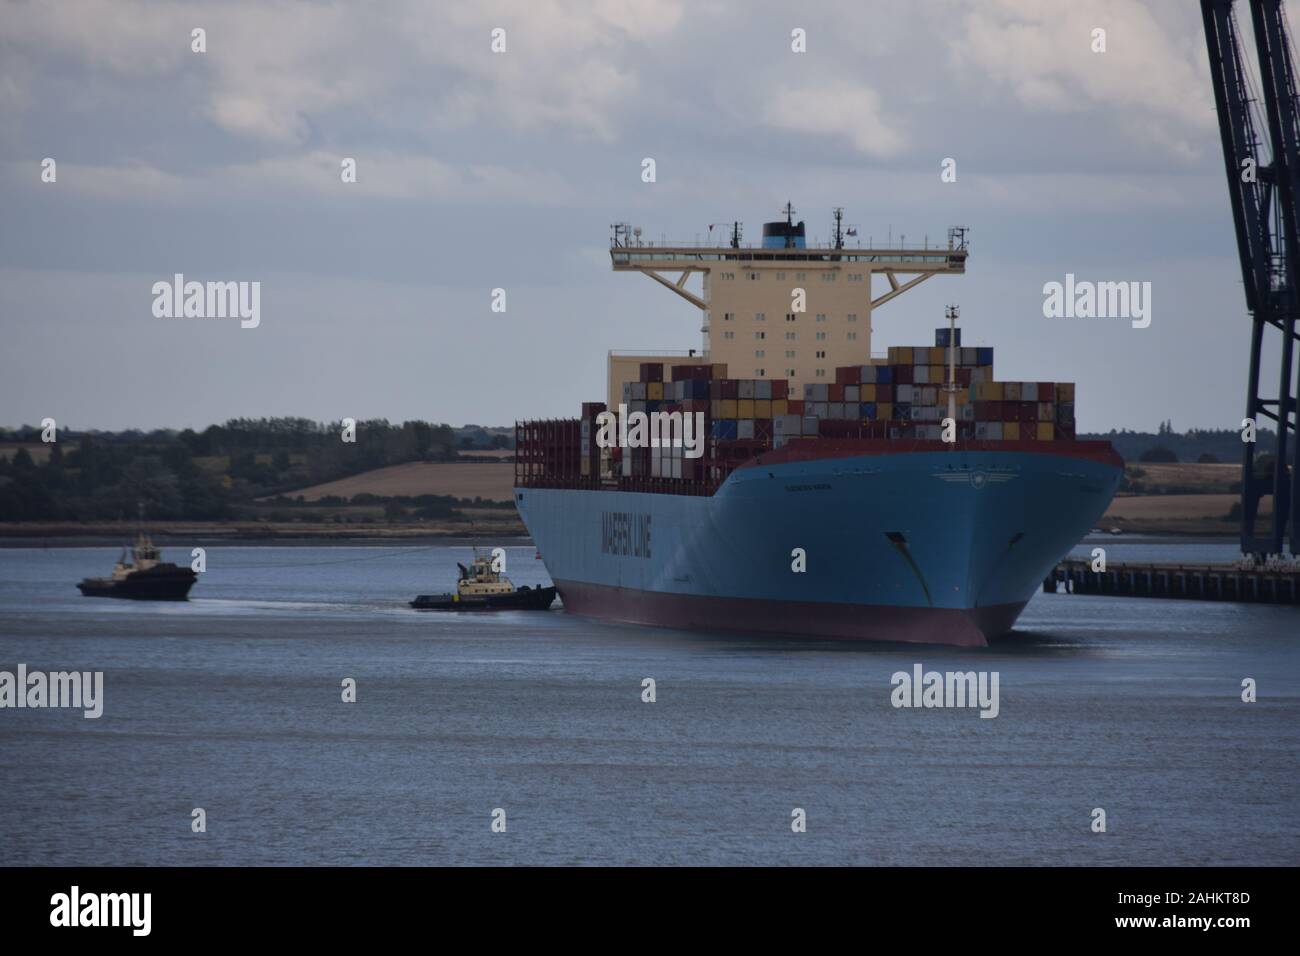 Container ship Eleonora Maersk in Felixstowe, Suffolk, England, UK Stock Photo